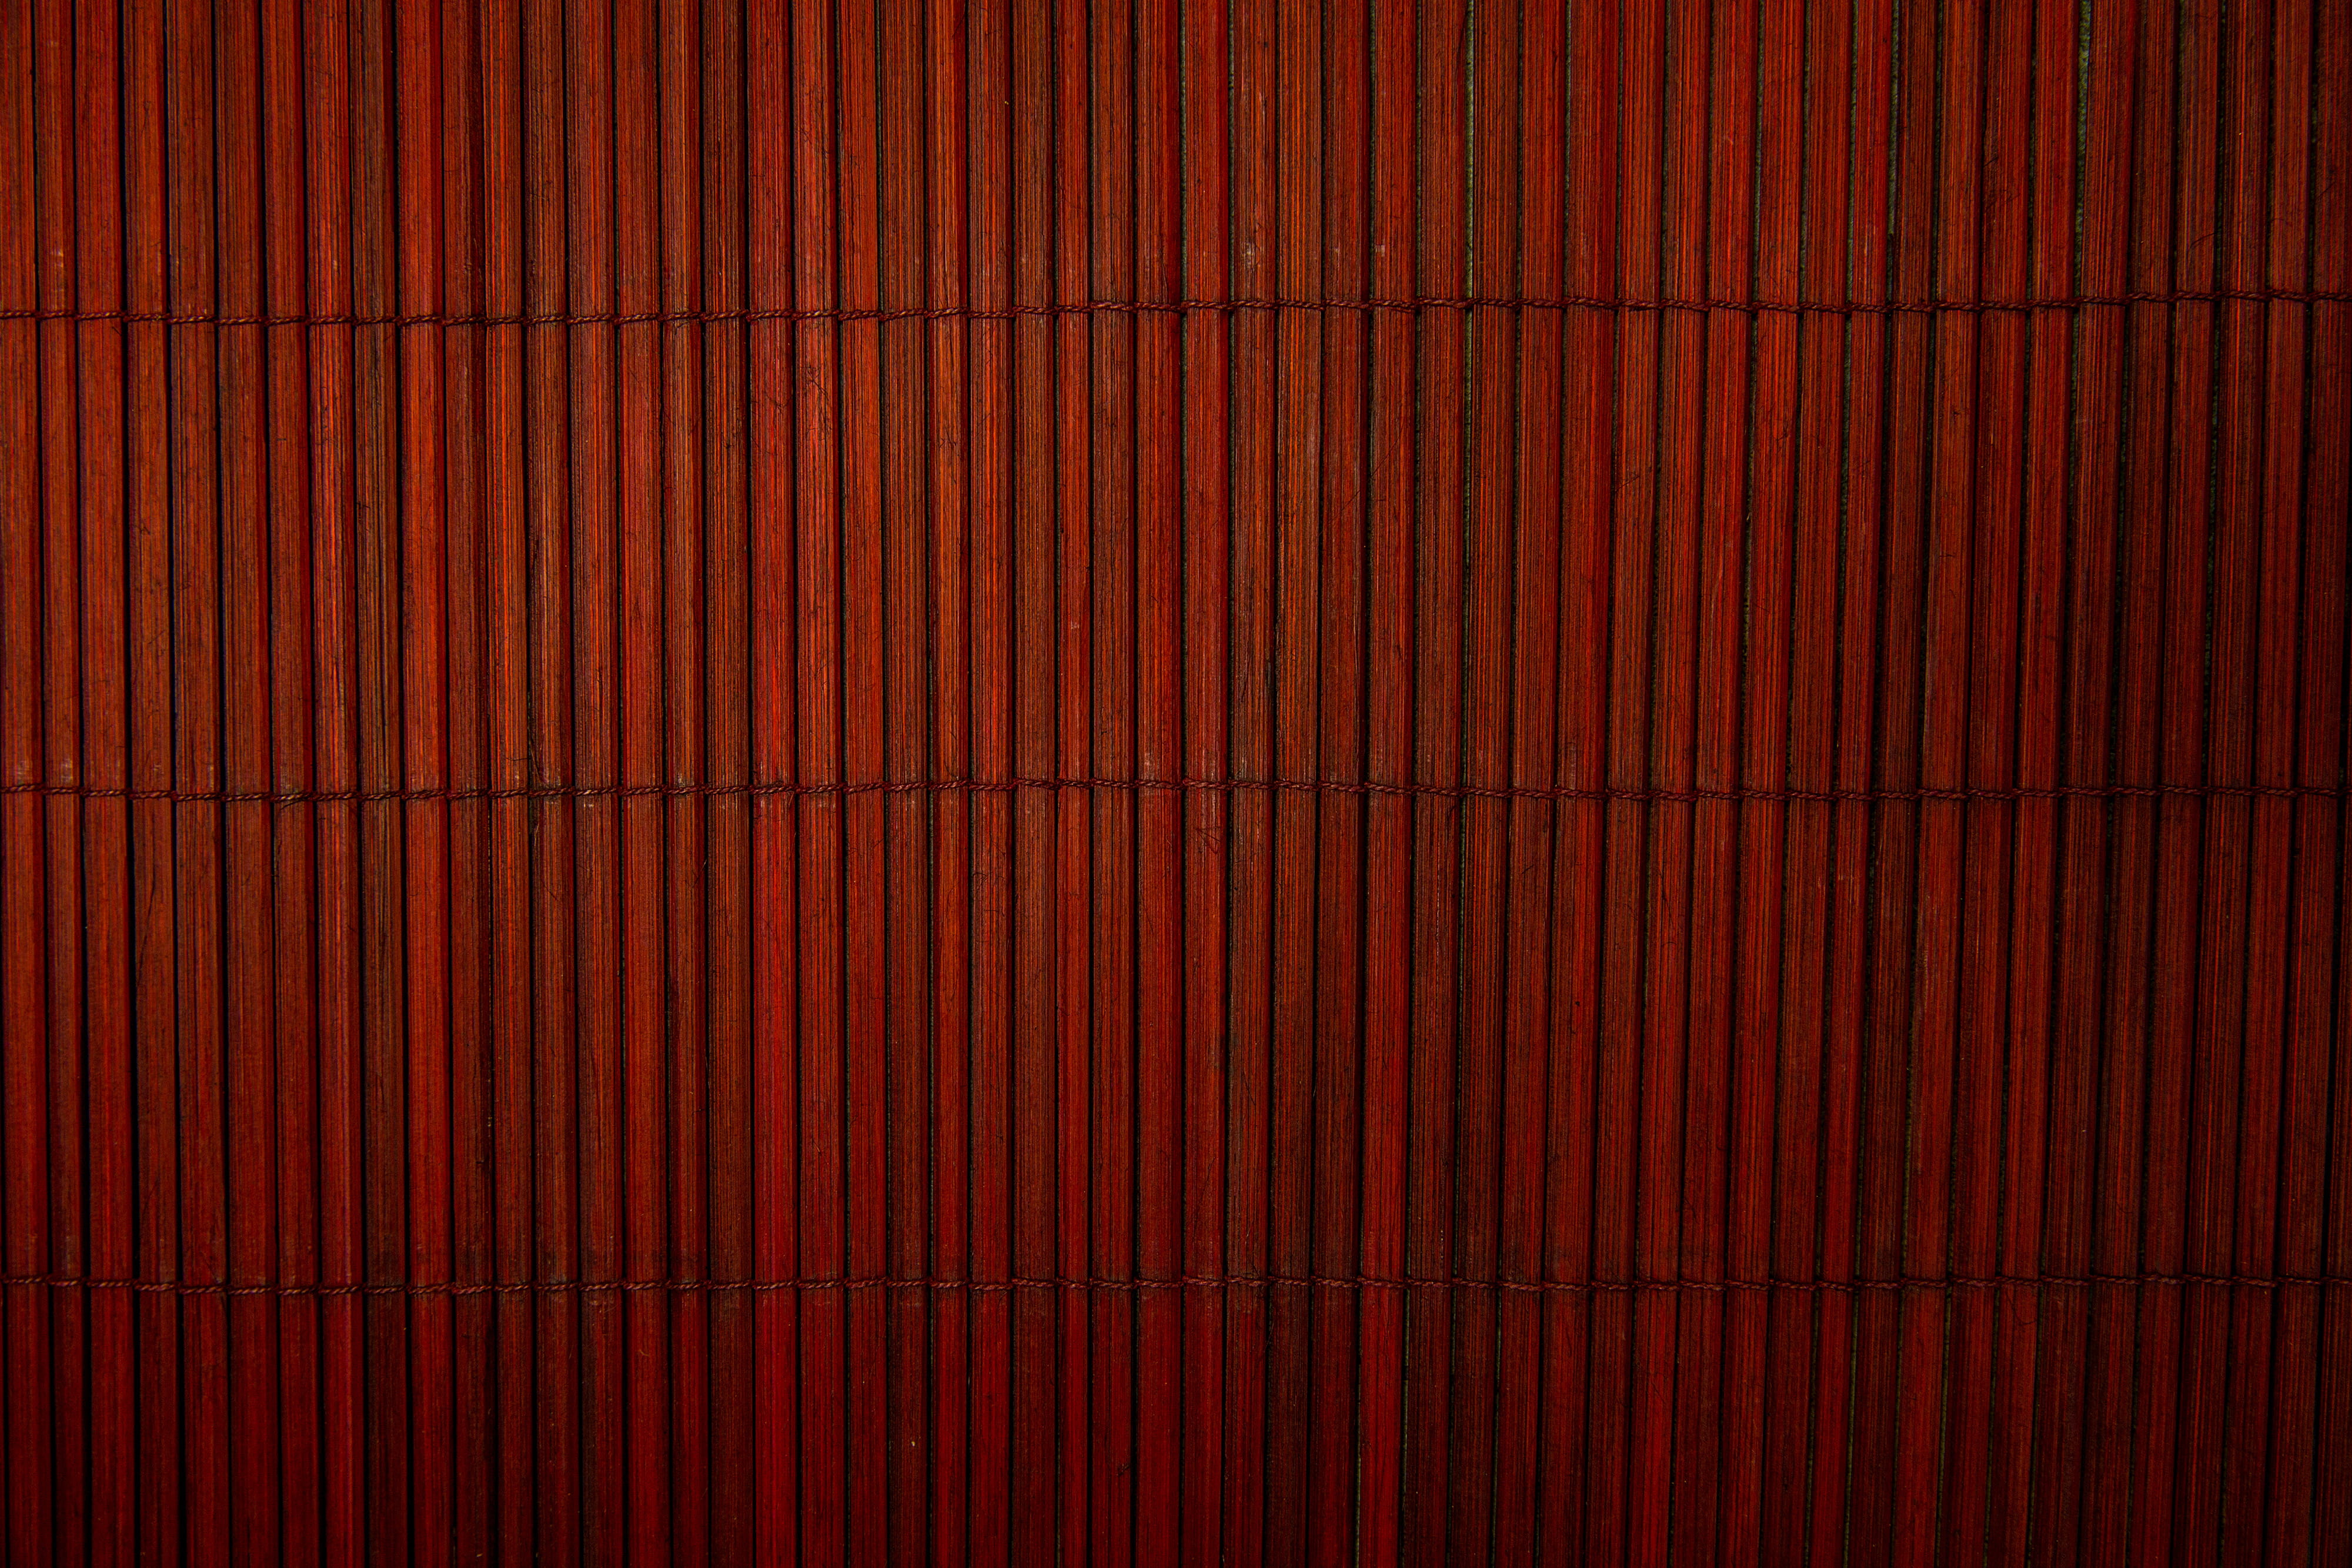 Closeup shot of a red bamboo wood texture, textures, backgrounds